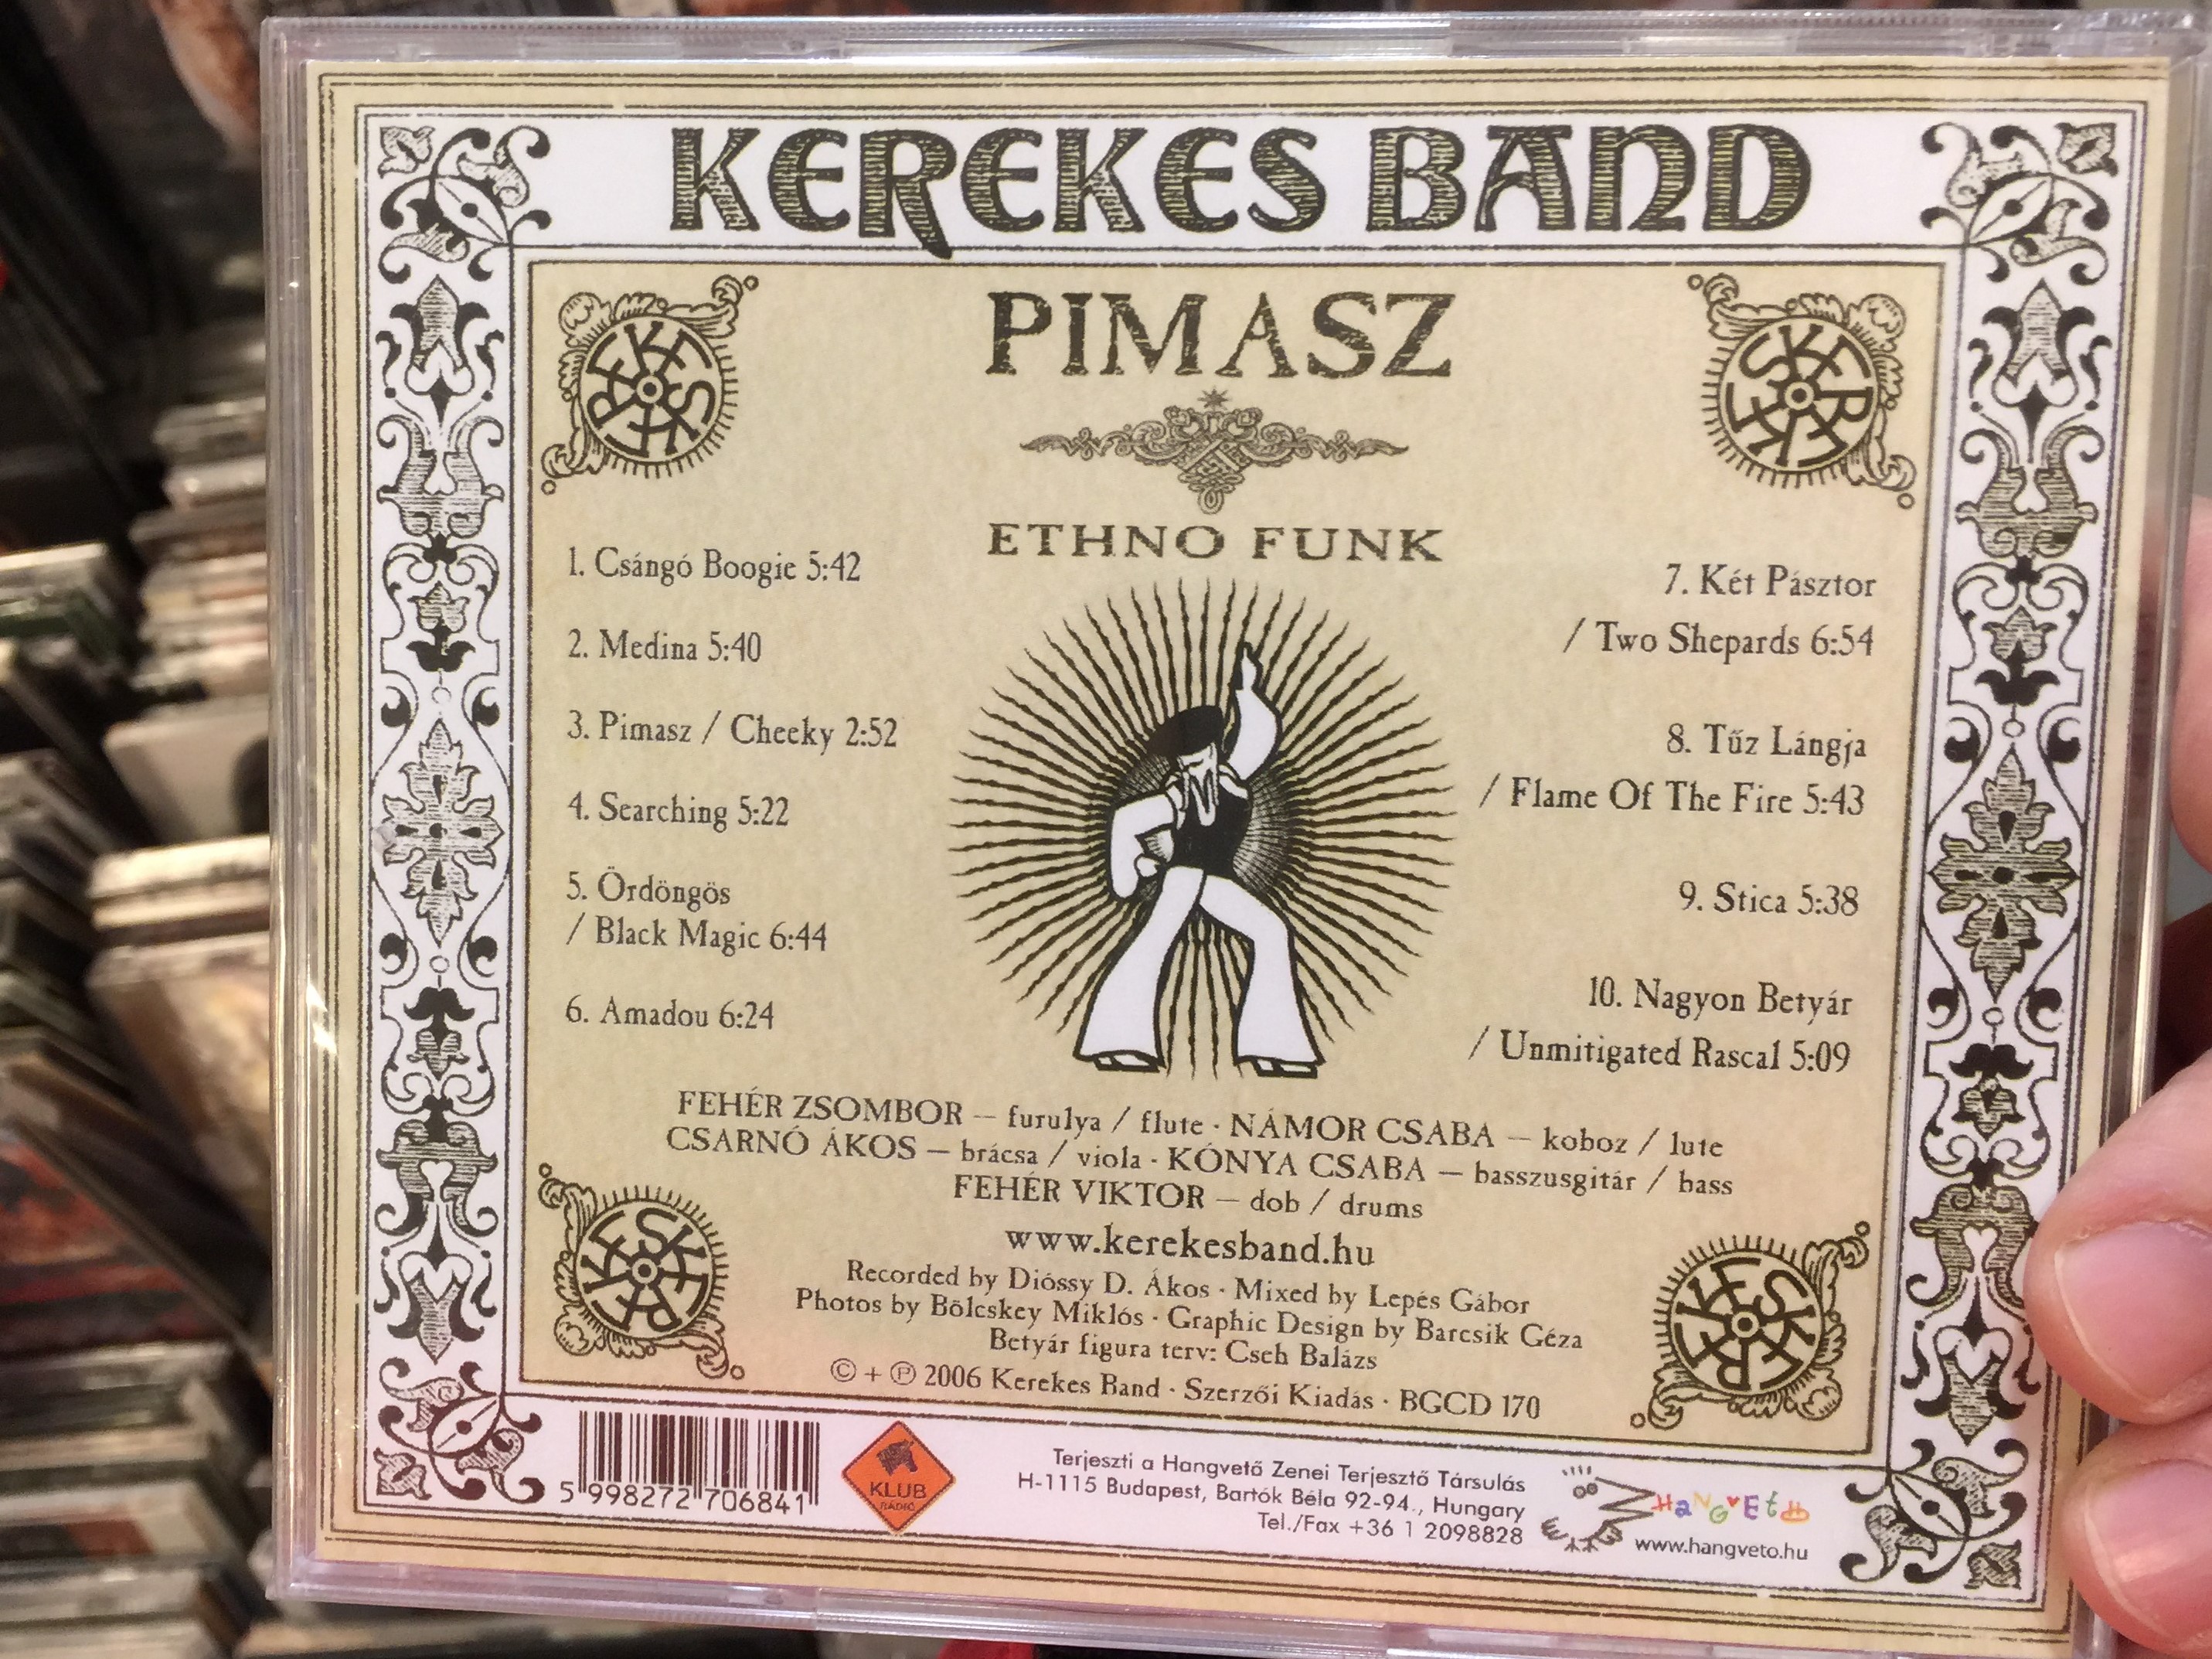 kerekes-band-pimasz-ethno-funk-not-on-label-kerekes-band-self-released-audio-cd-2006-bgcd-170-2-.jpg